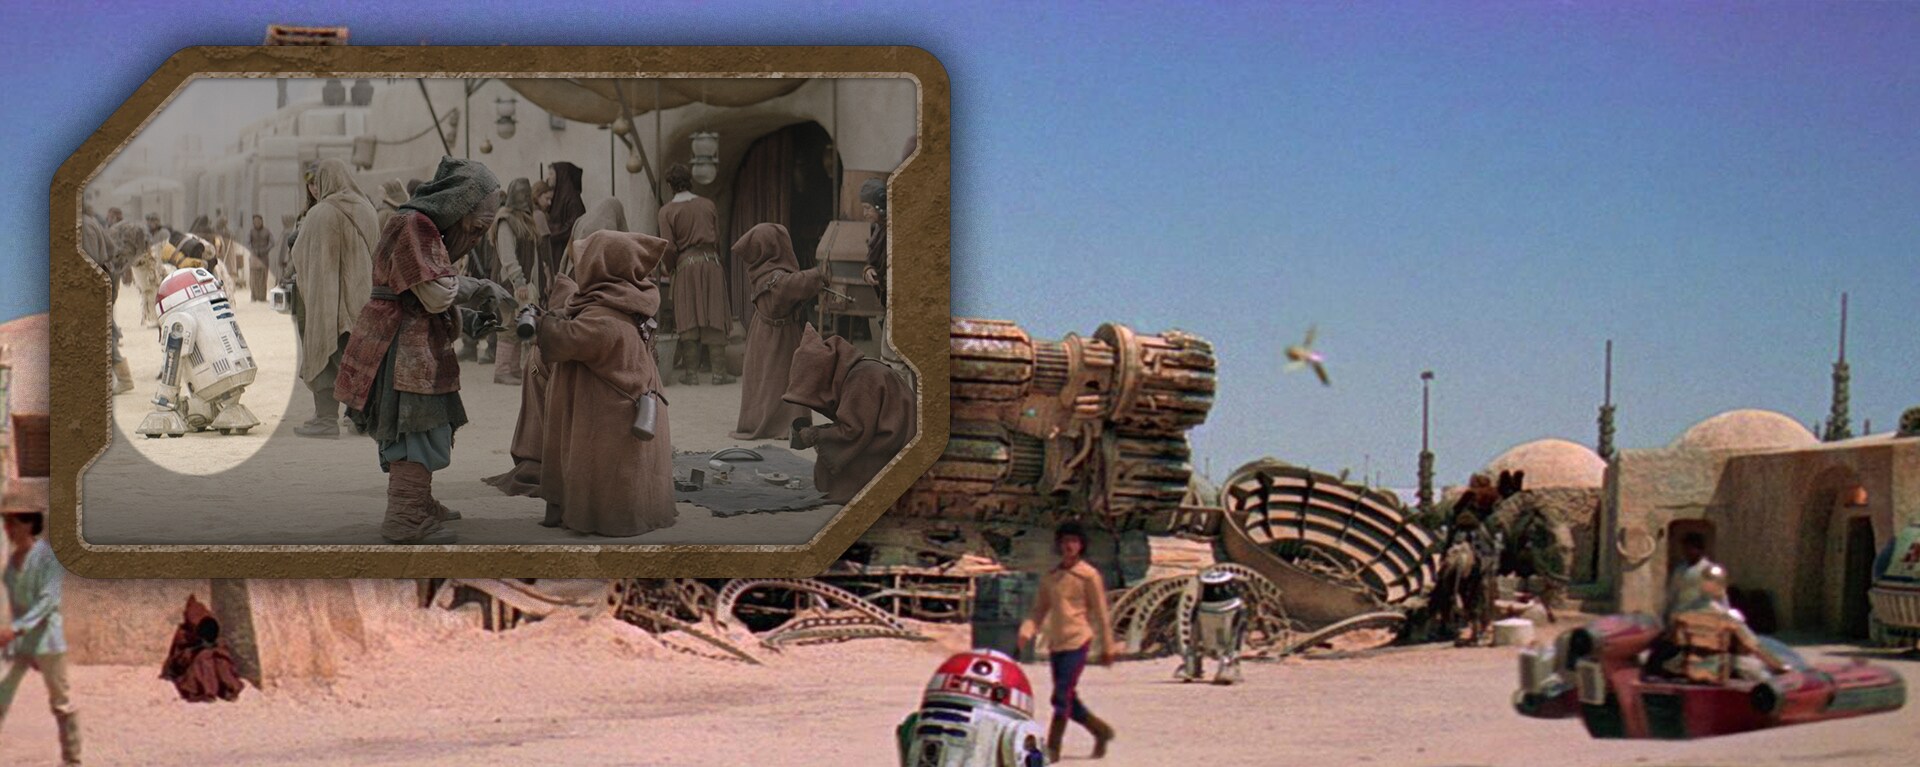 Obi-Wan Kenobi | Part I Trivia Gallery